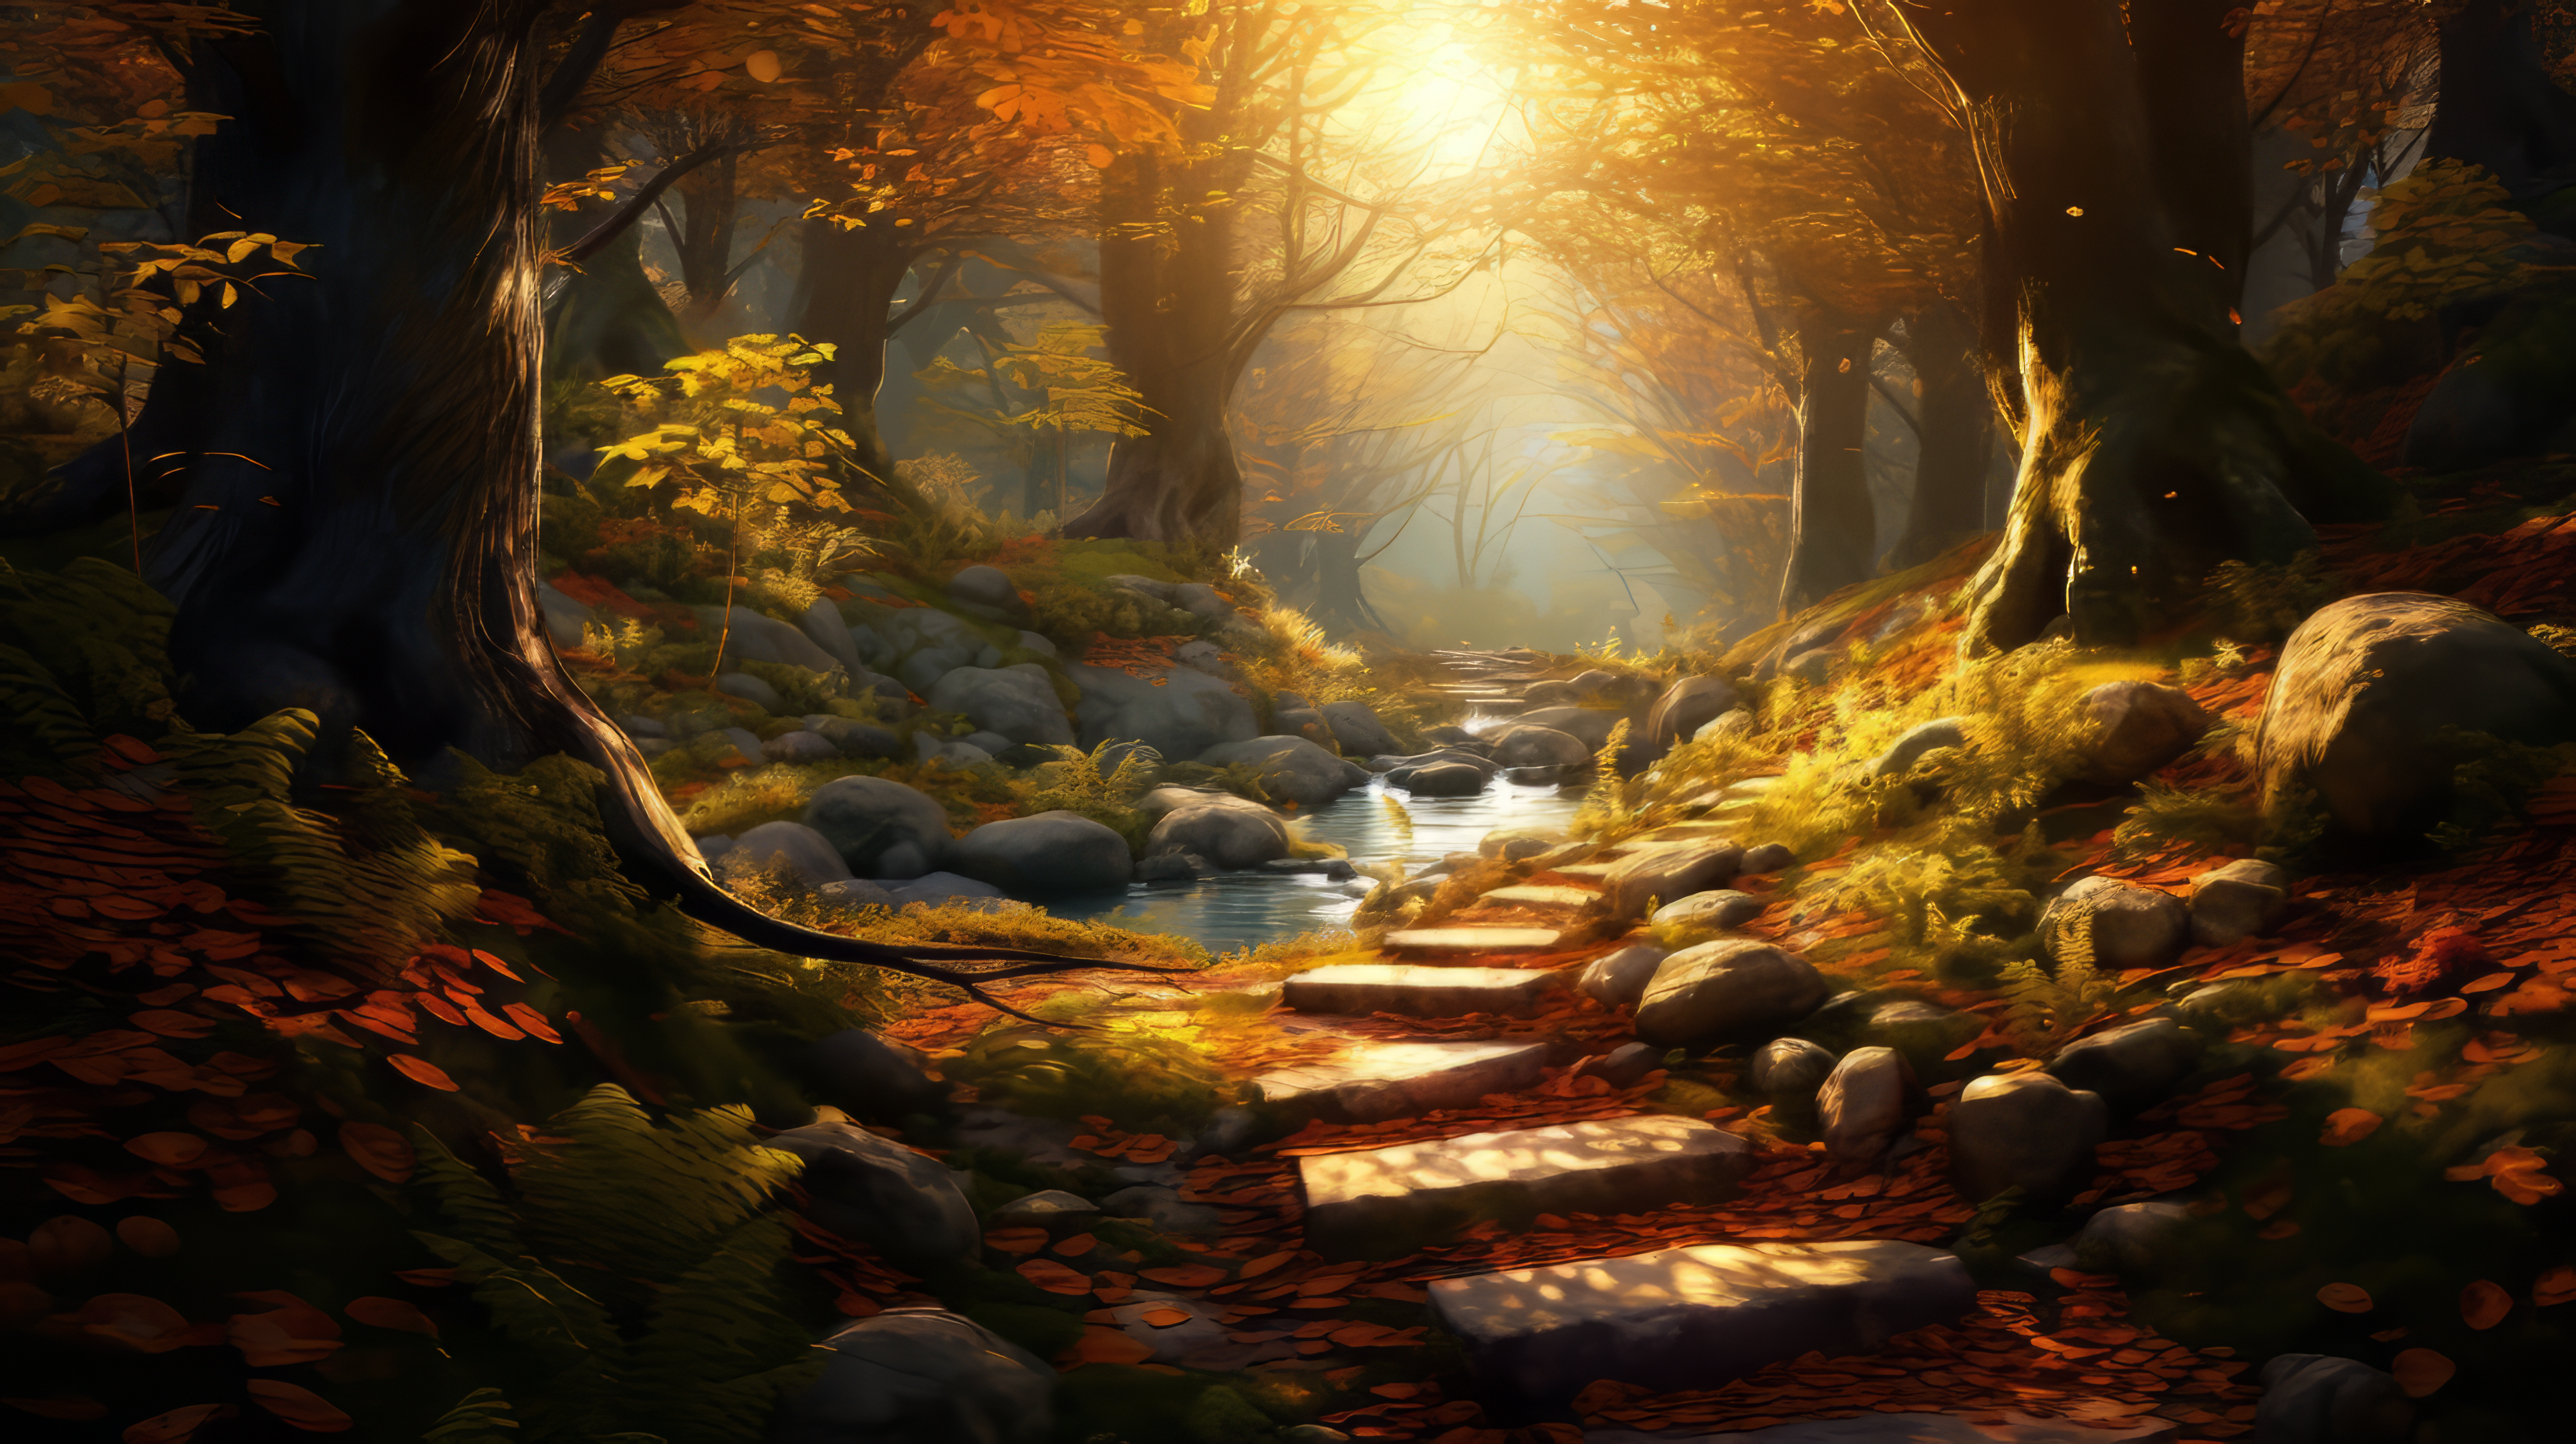 Nature Fall 4k Ultra HD Wallpaper by patrika